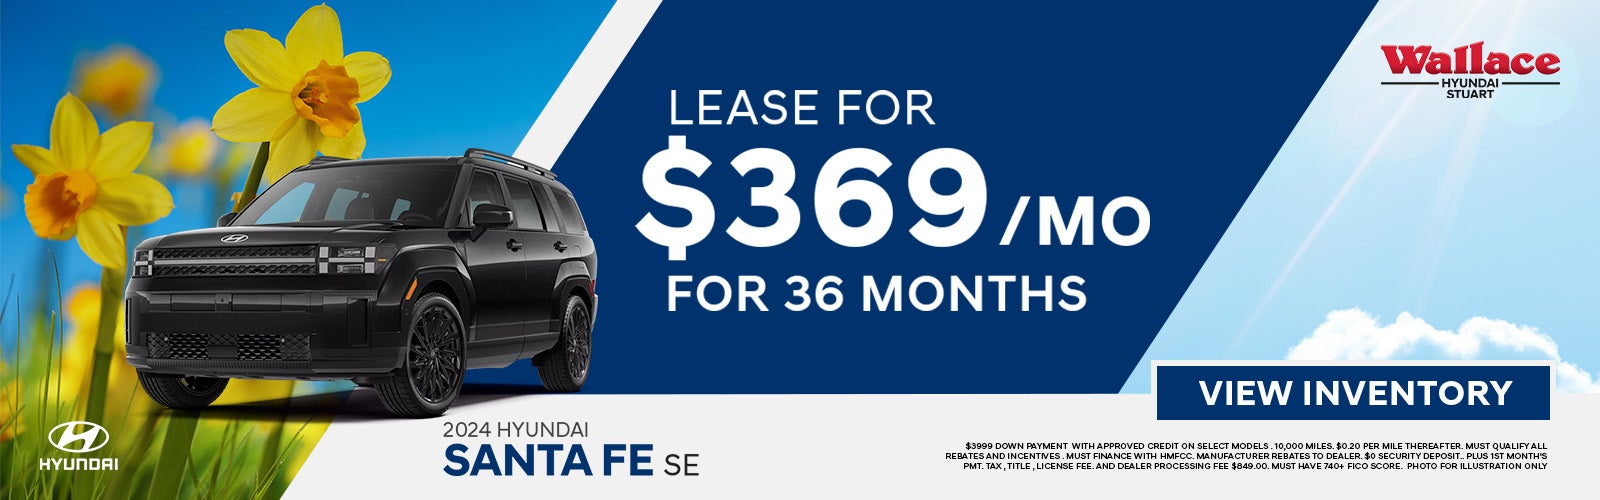 Hyundai Santa Fe Special Offer